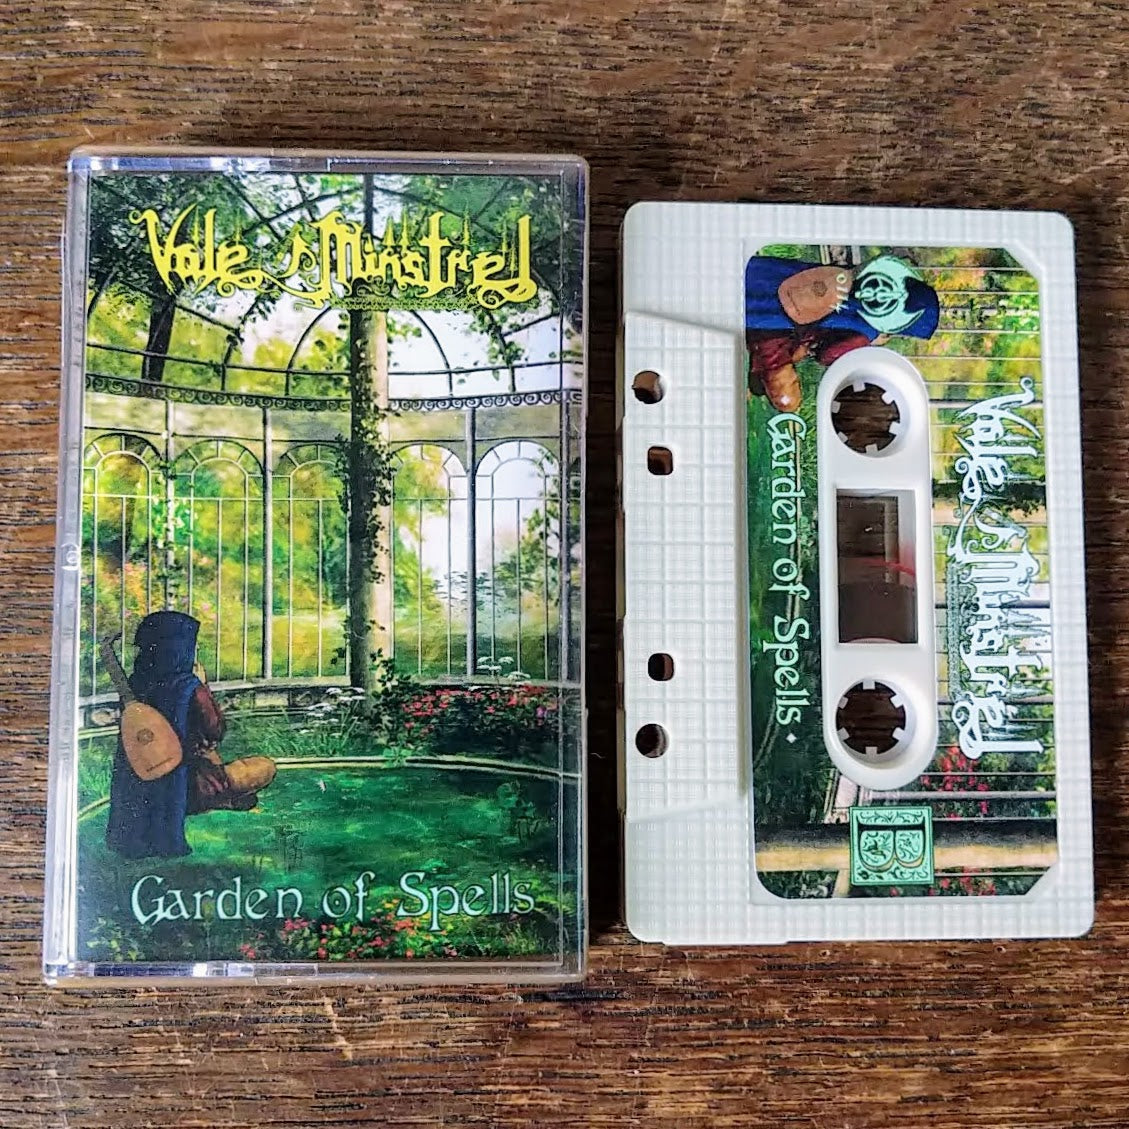 [SOLD OUT] VALE MINSTREL "Garden Of Spells" Cassette Tape (Lim. 100)